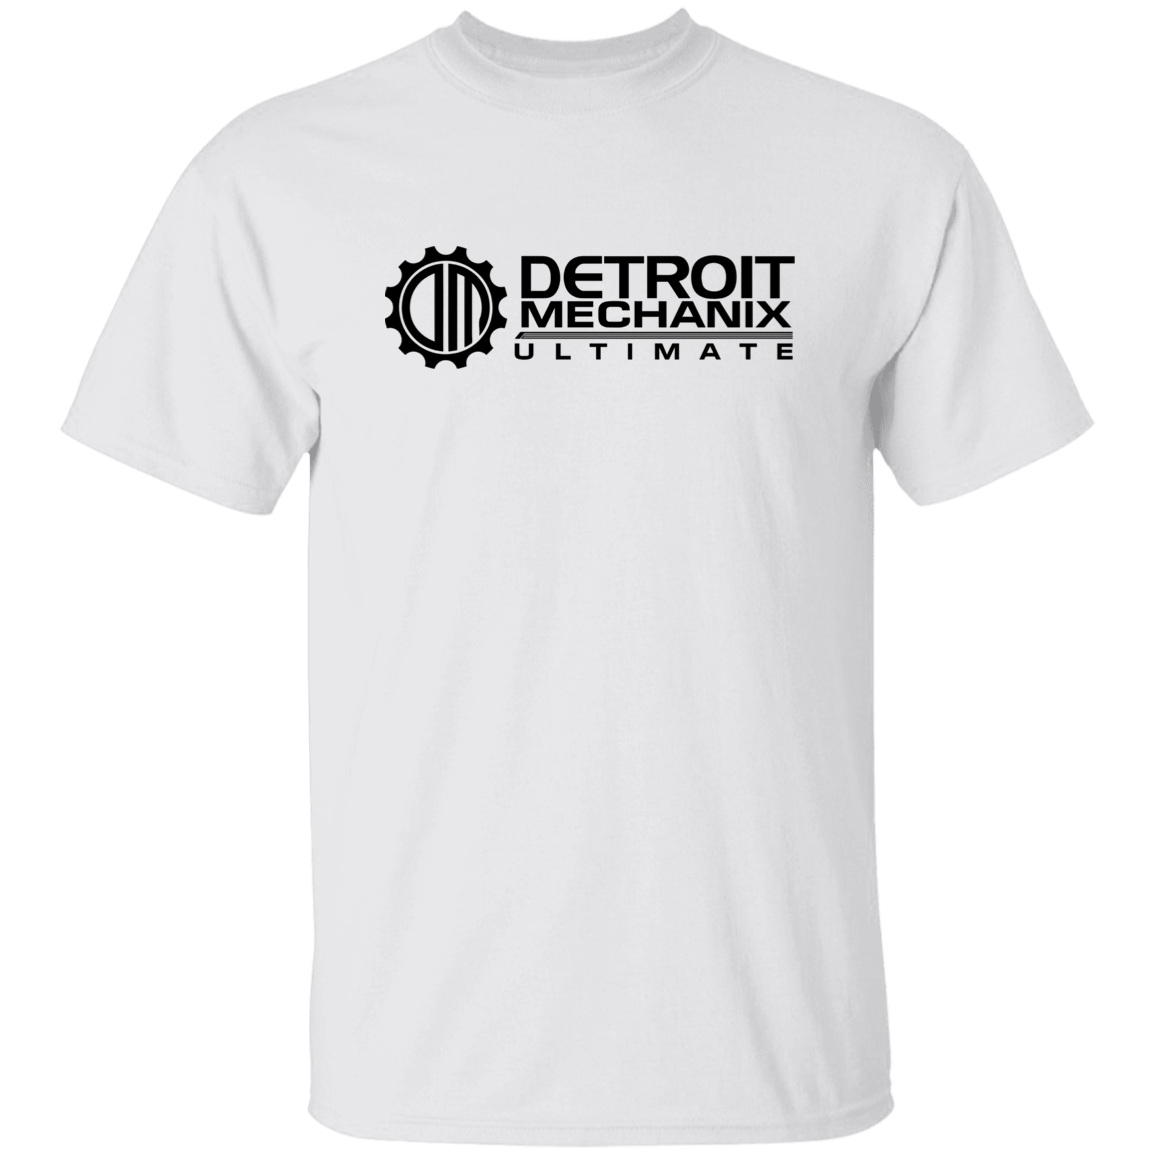 Detroit Mechanix Ultimate T-Shirt